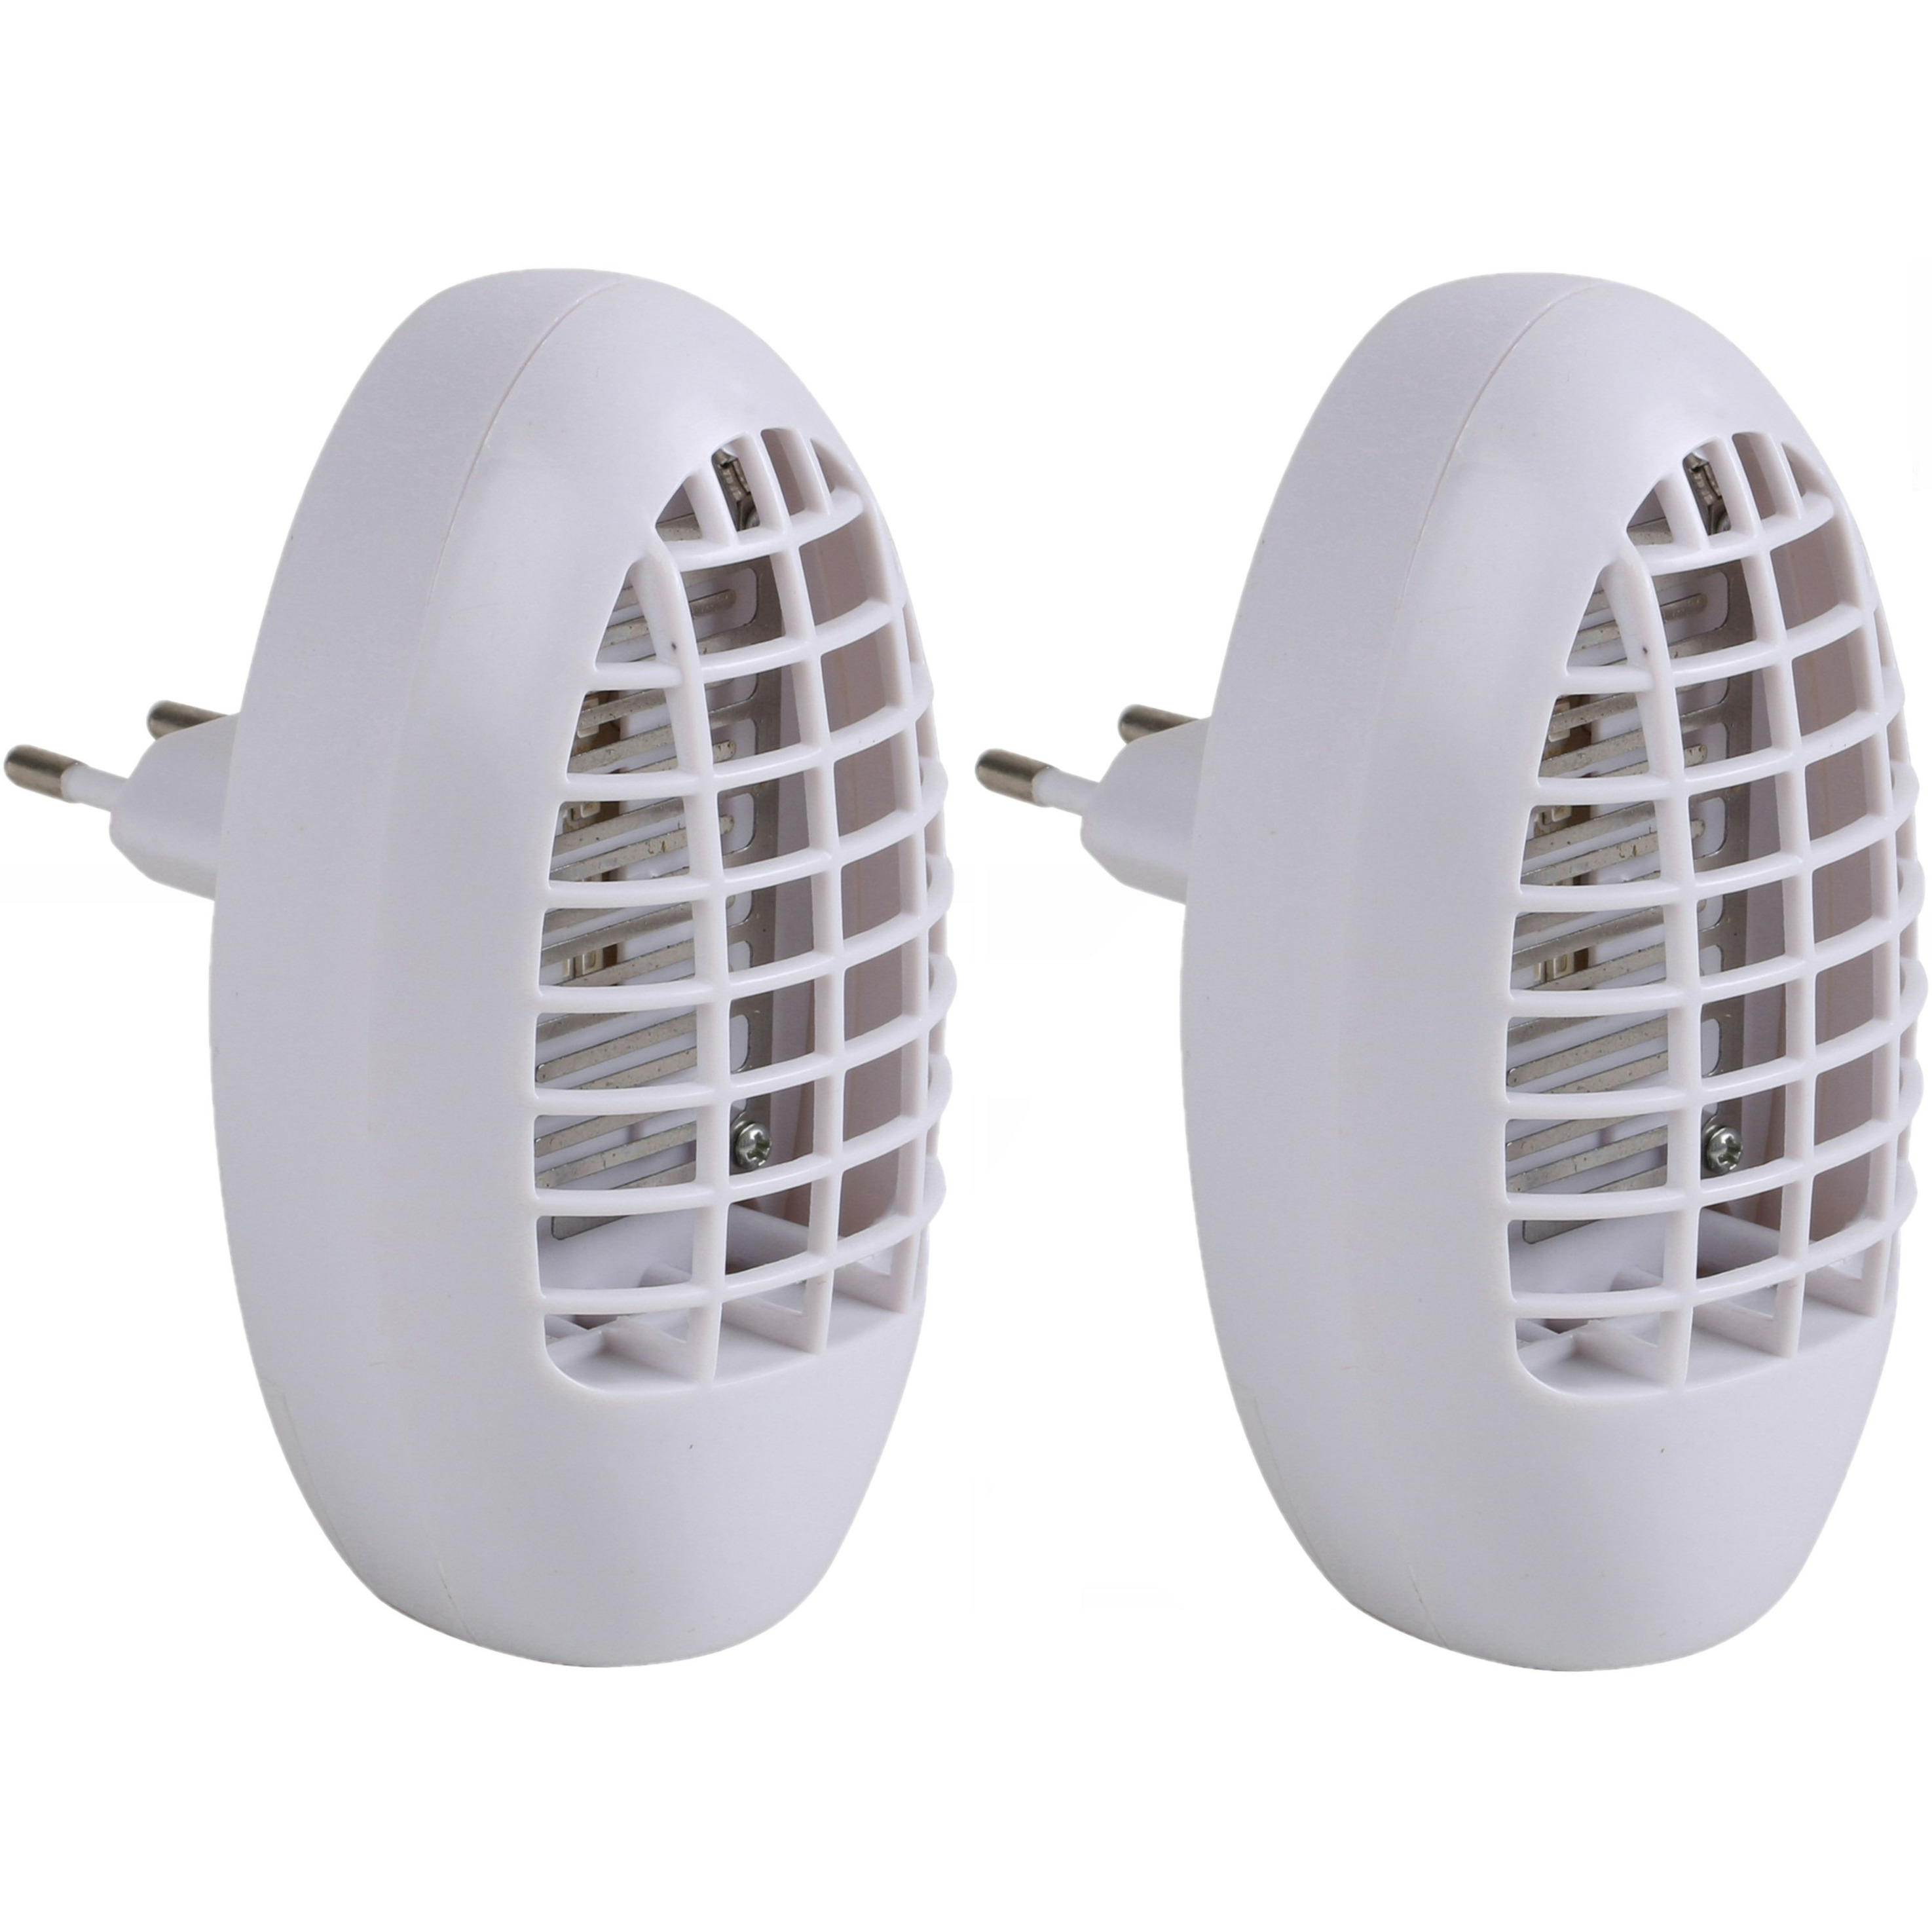 Muskieten-muggen UV LED insectenlamp 2x wit elektrisch 14 x 9 x 4 cm